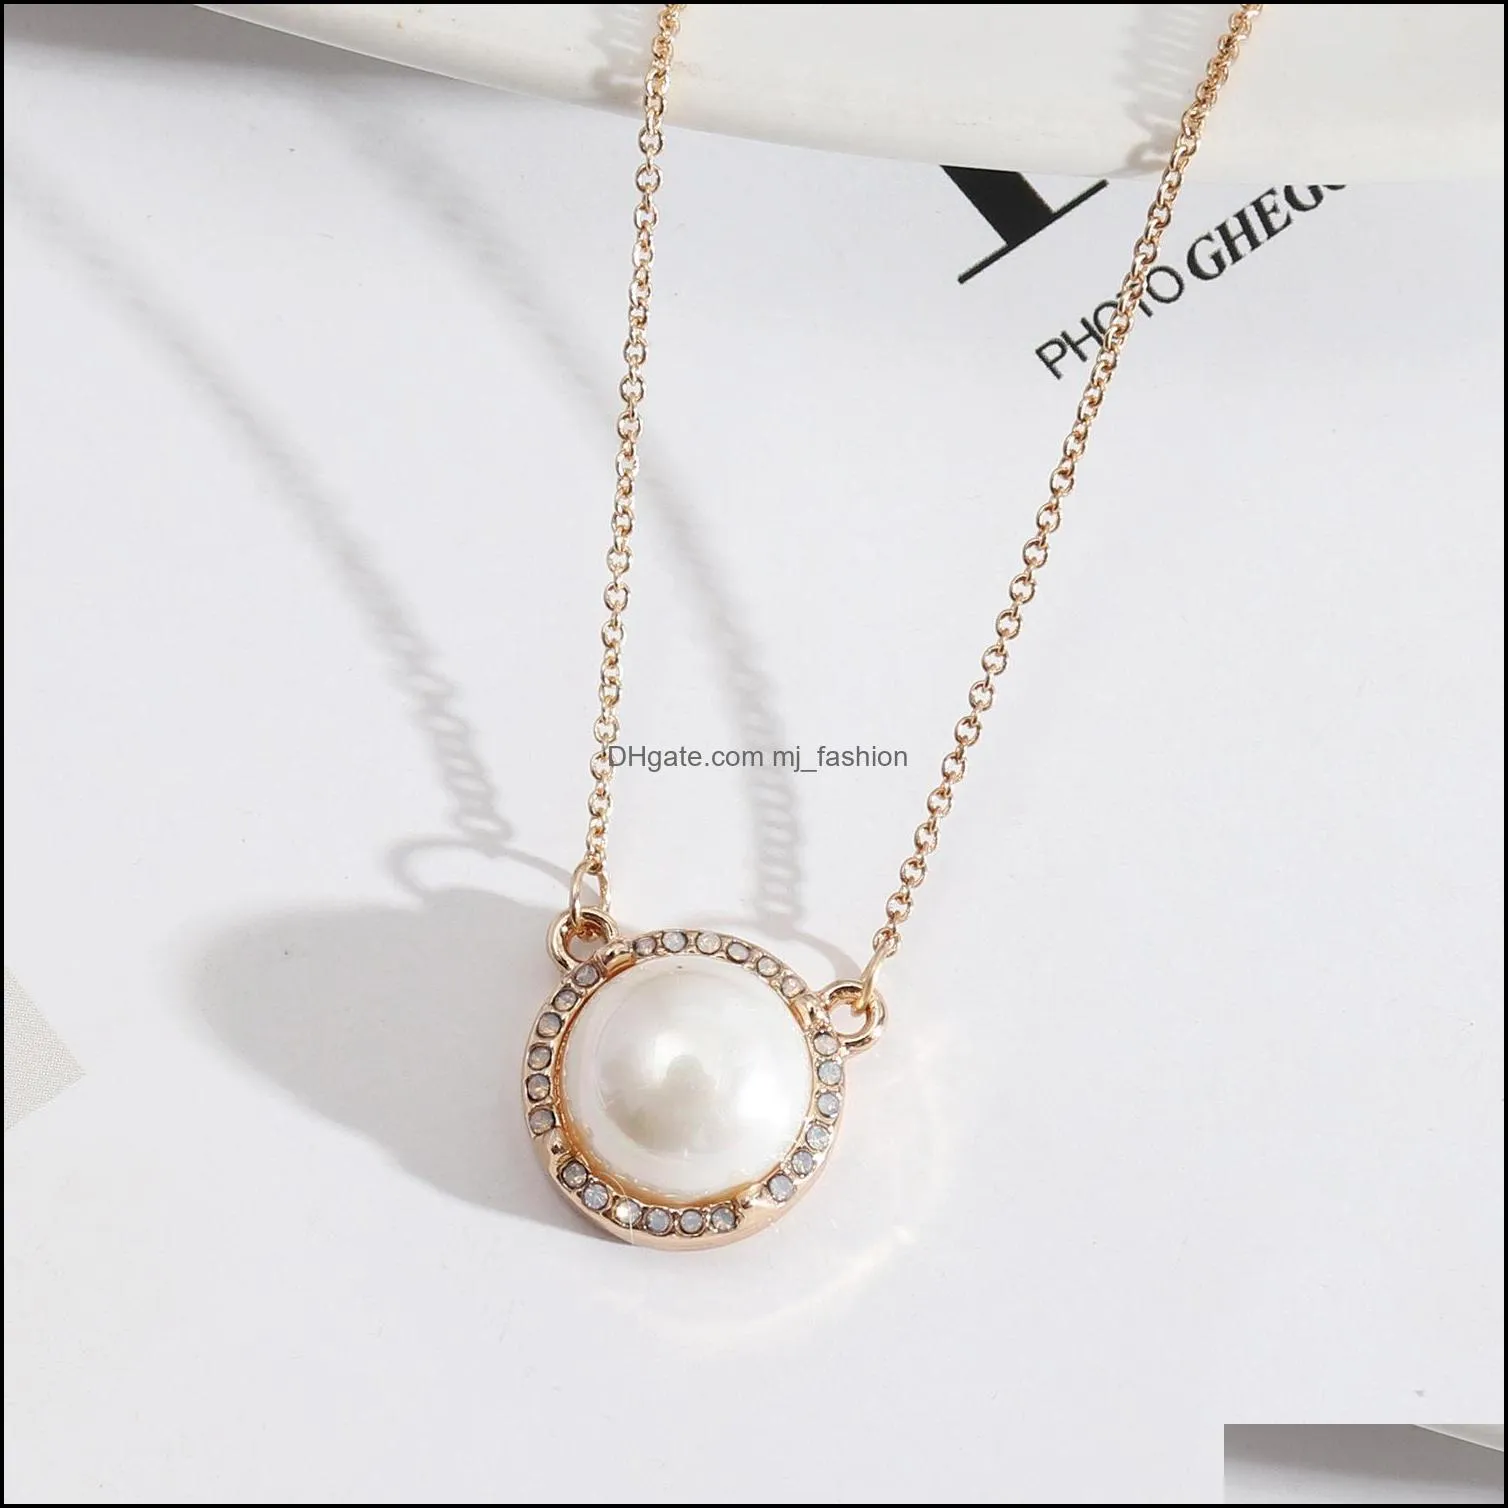 15mm round lapis lazuli pearl turquoise rose natural stone quartz pendant gold chain necklaces geometric accessories jewelry